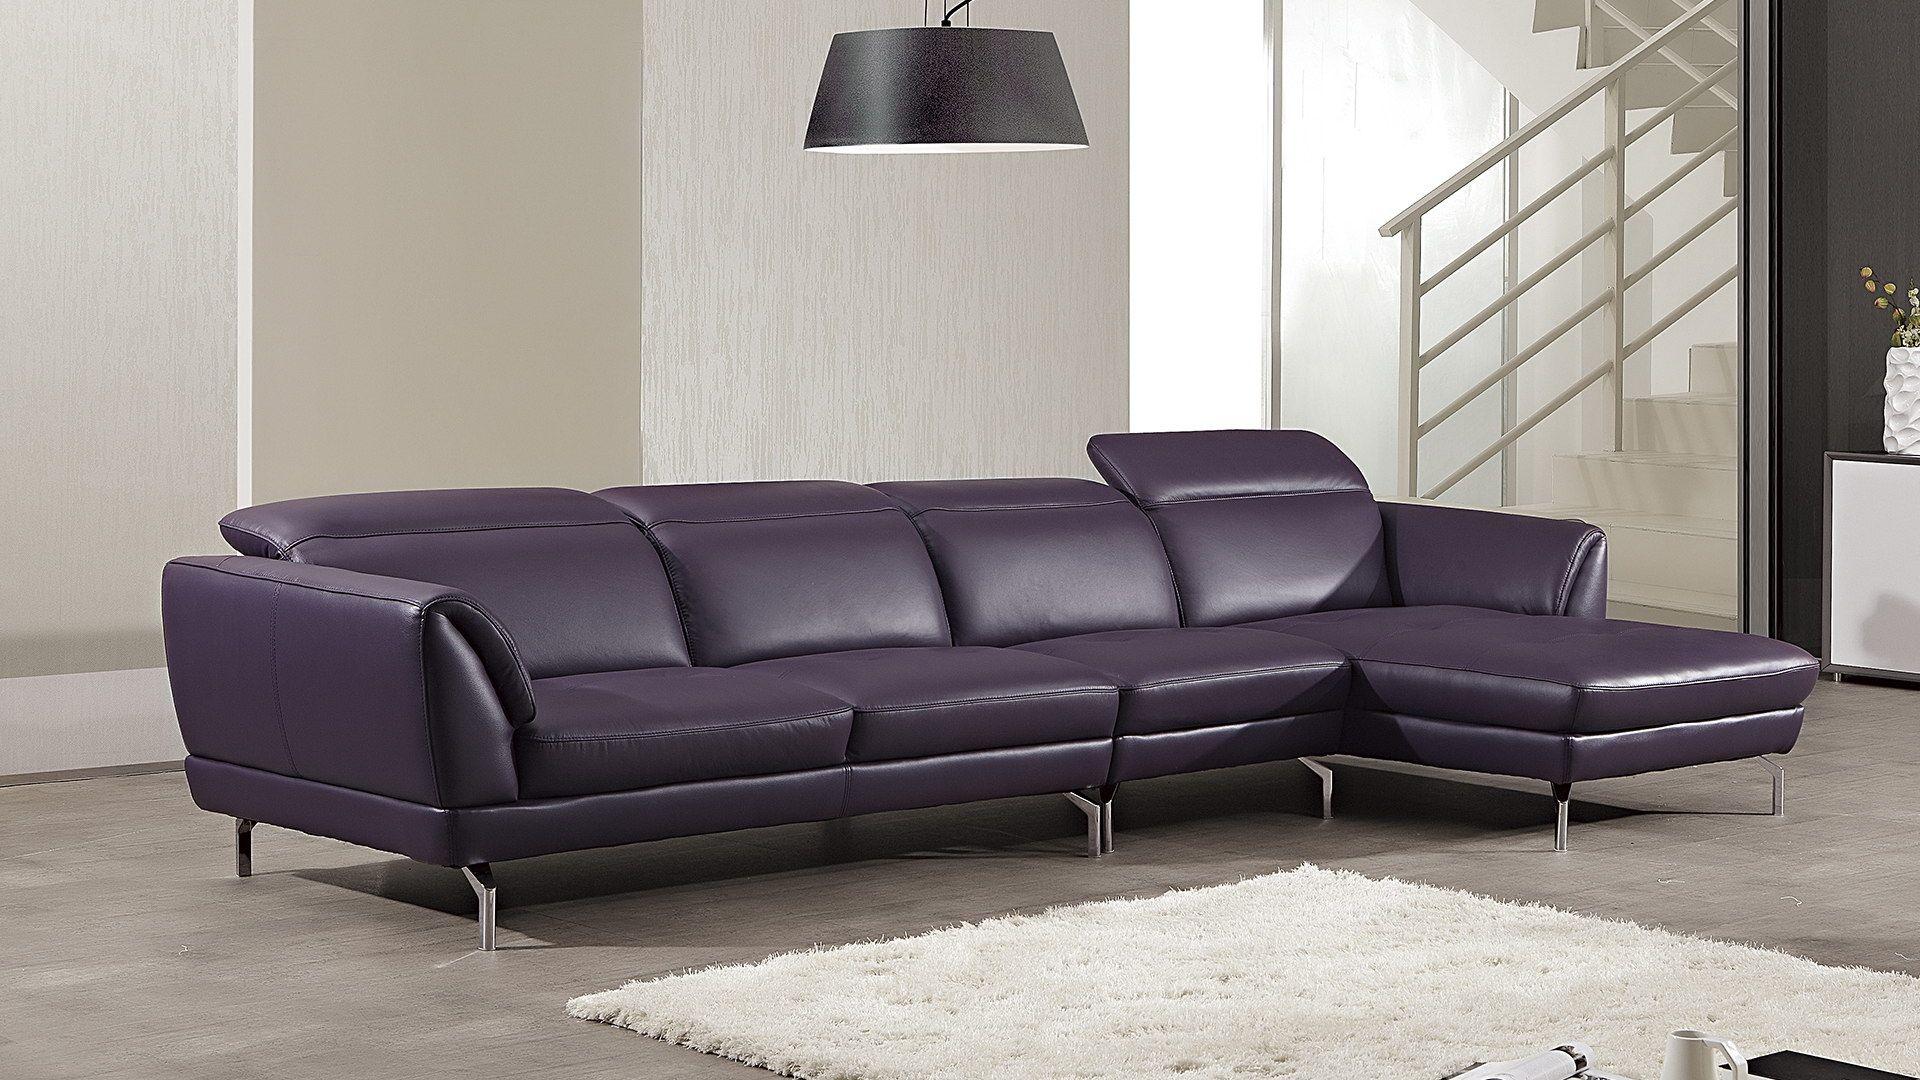 Contemporary, Modern Sectional Sofa EK-L023L-PUR EK-L023L-PUR in Purple Italian Leather